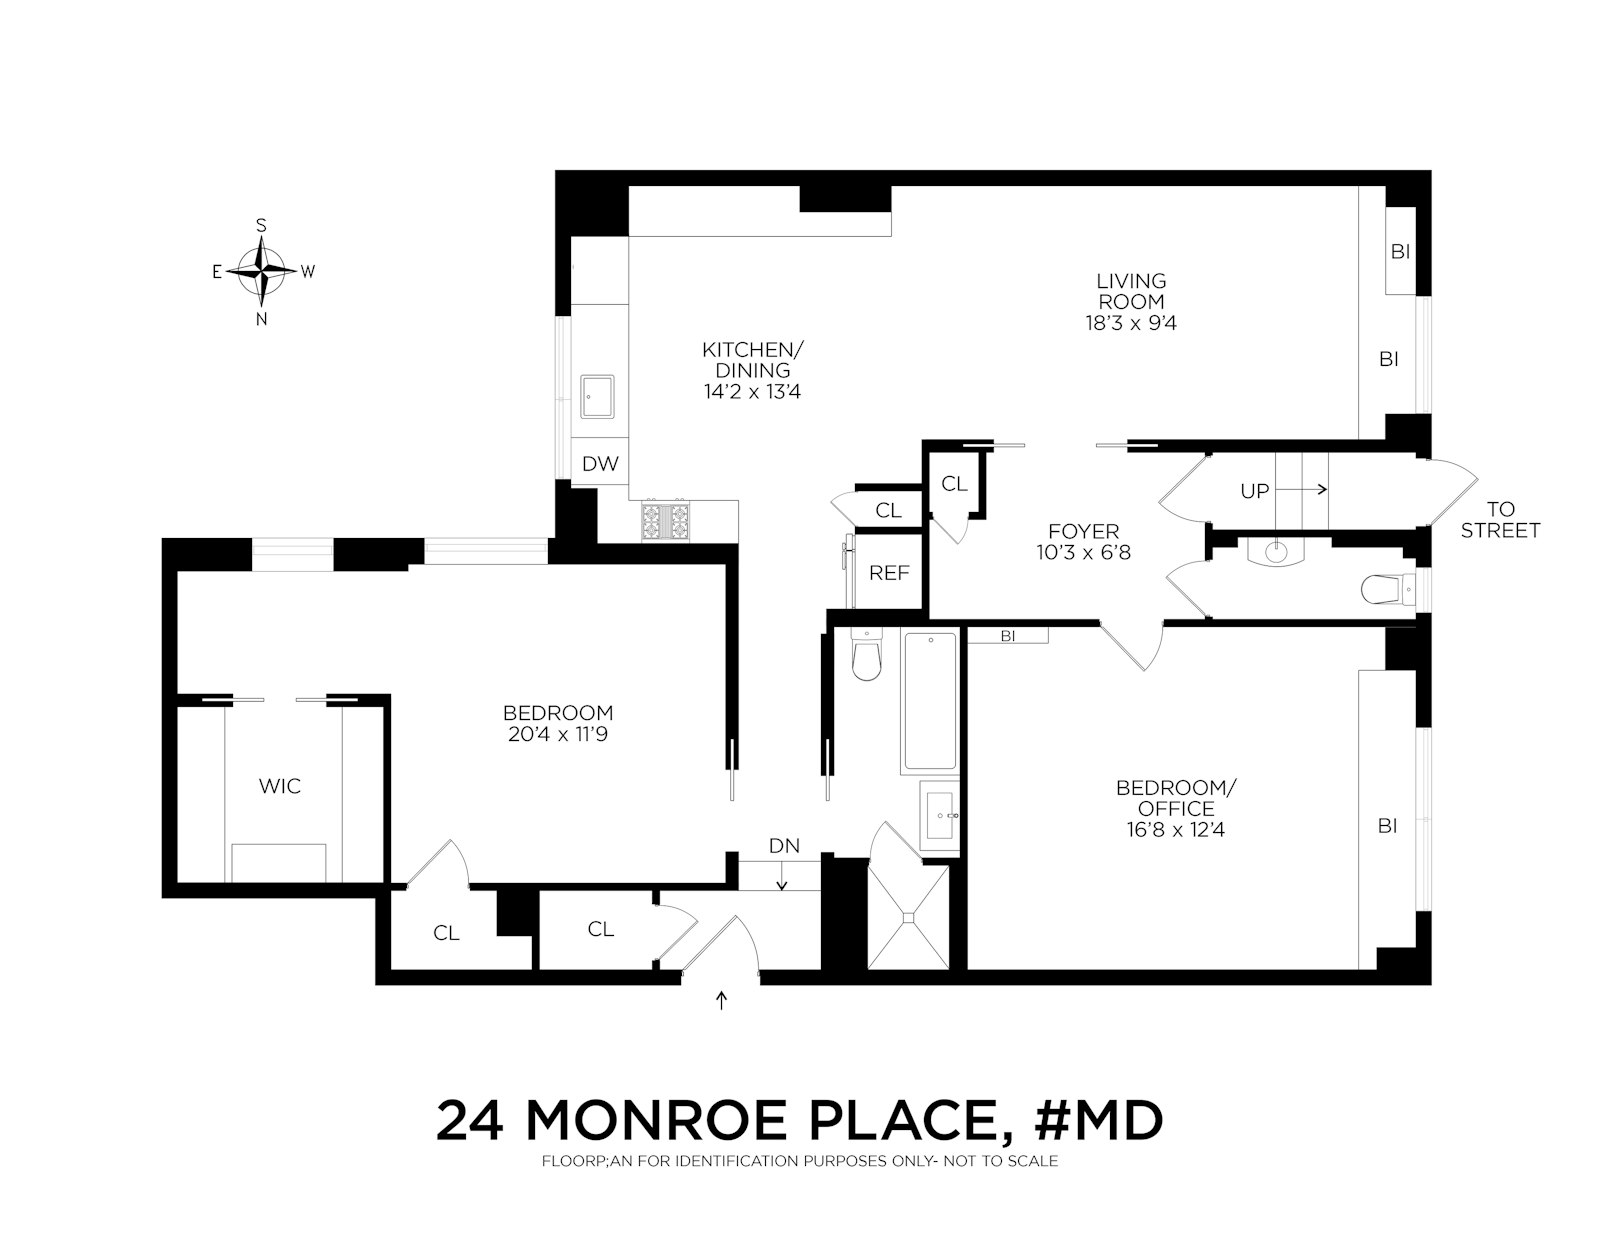 Floorplan for 24 Monroe Place, MD